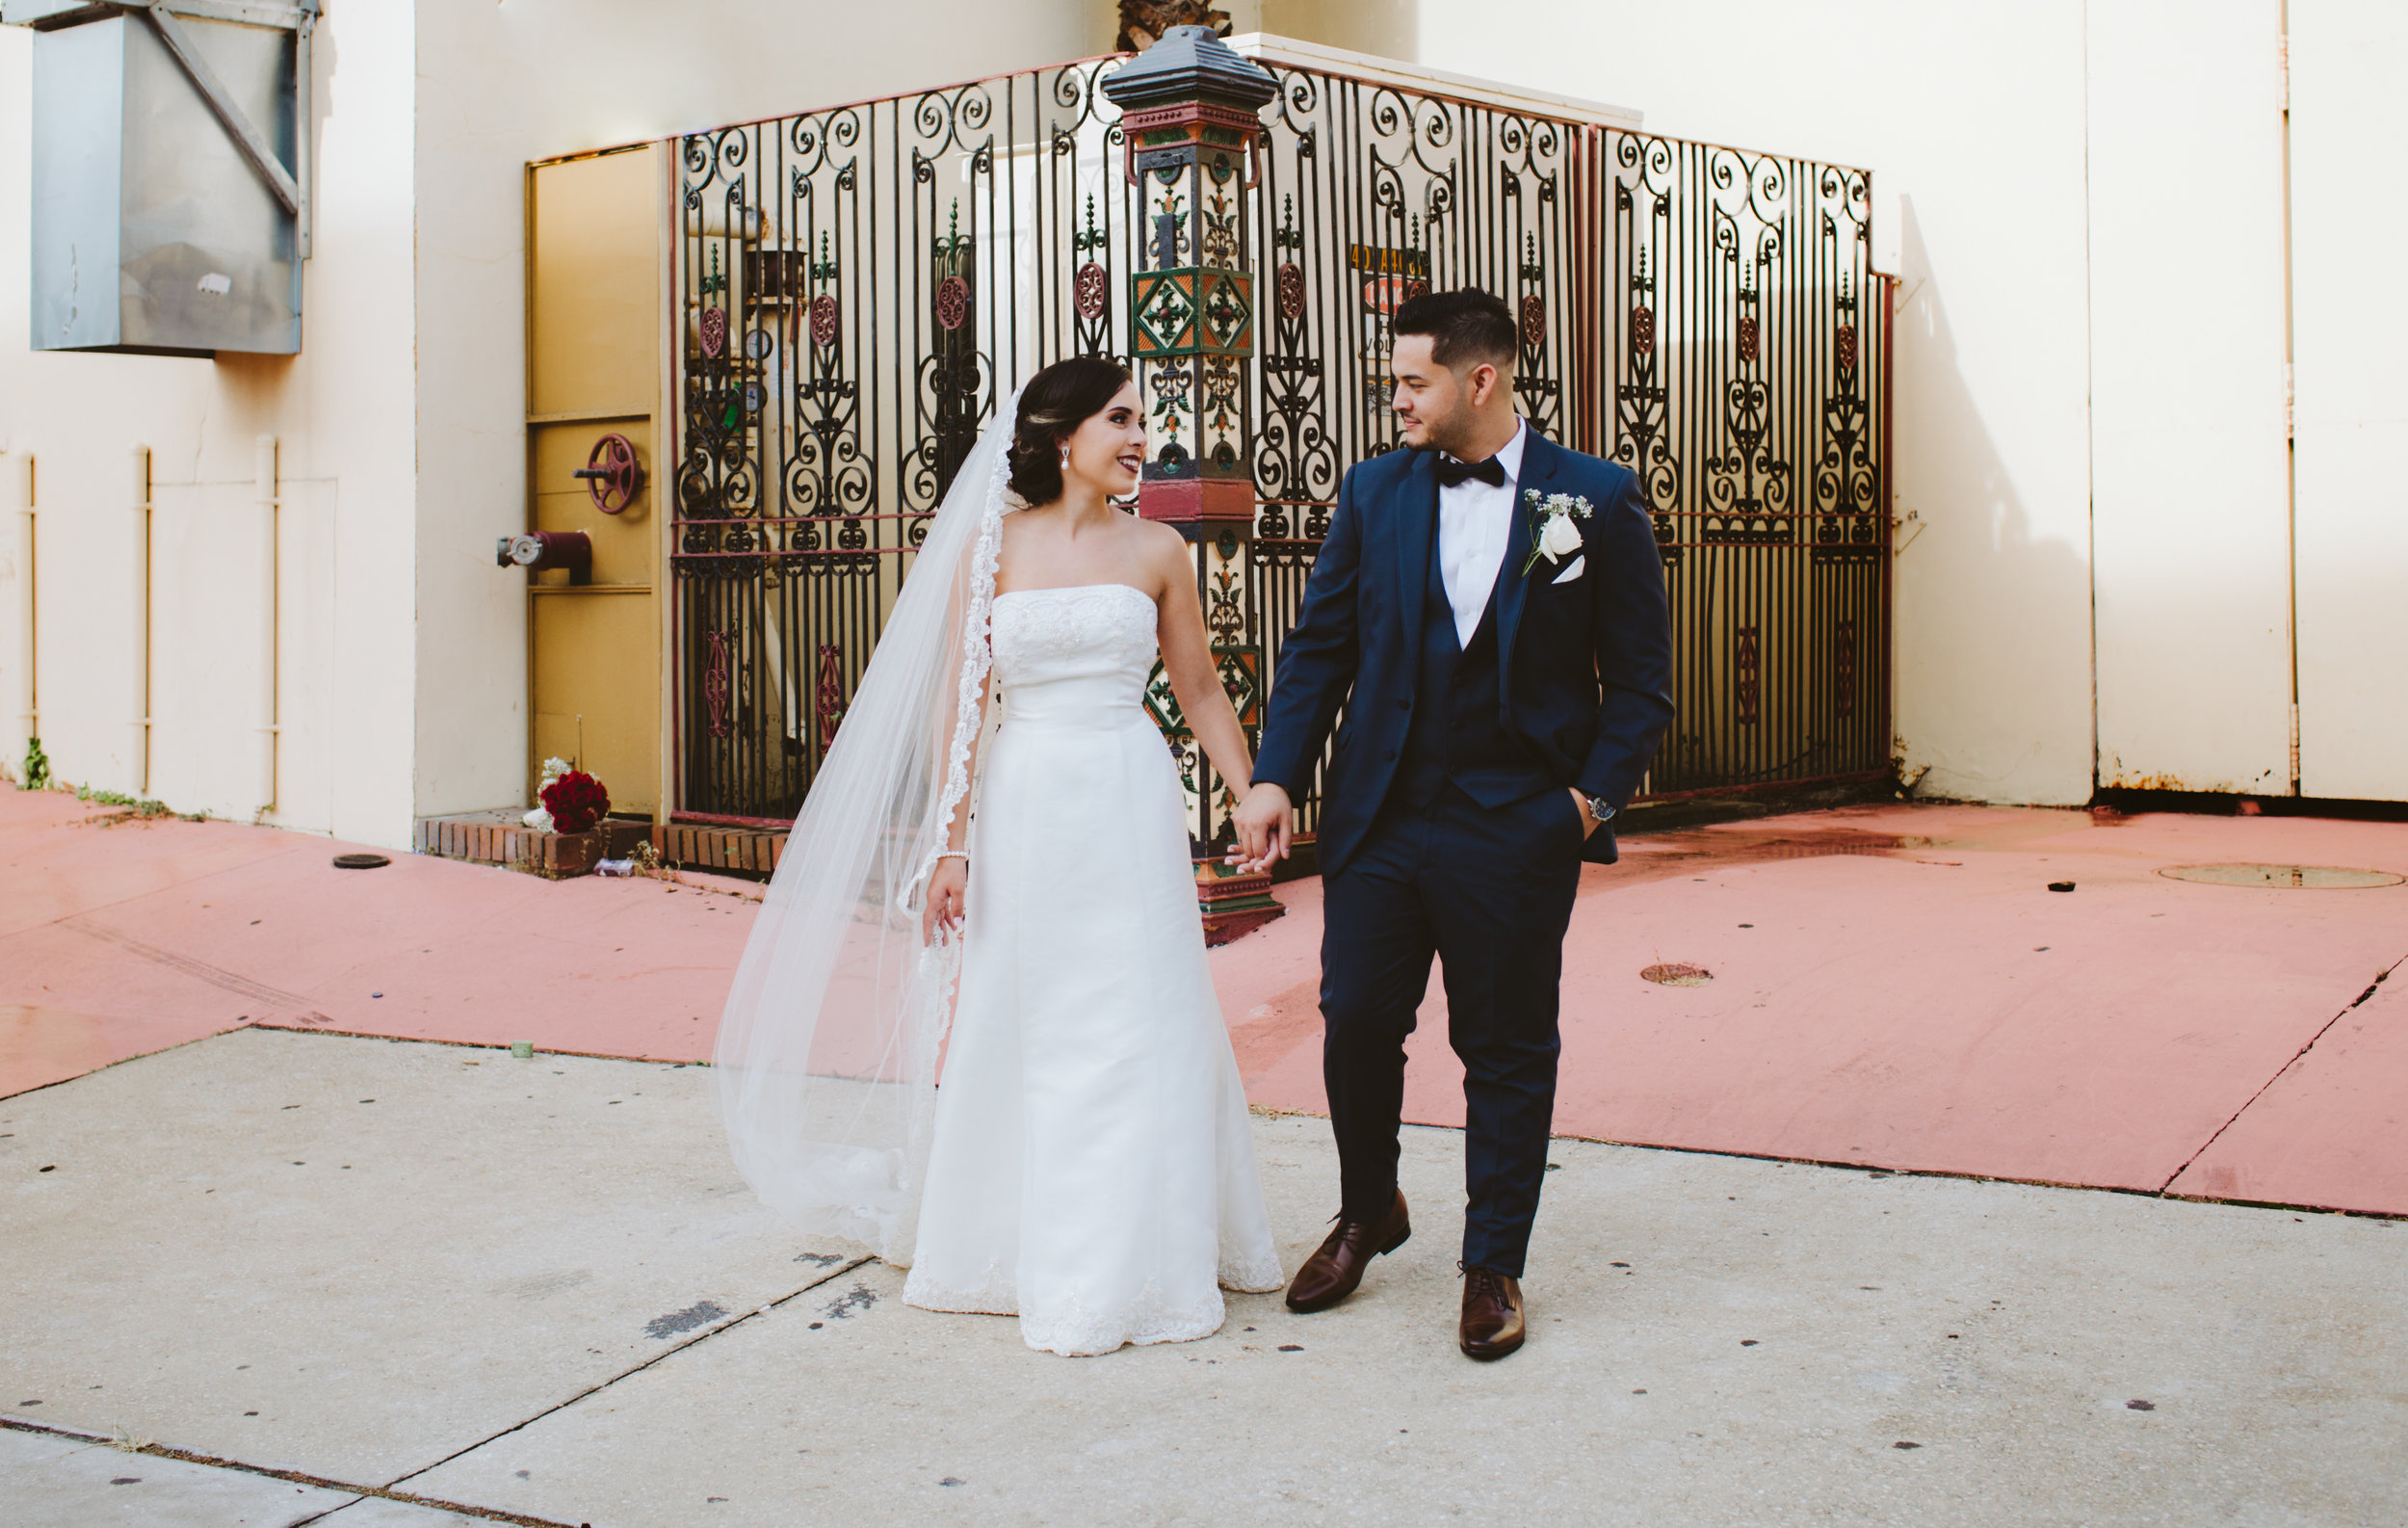 Ceviche Orlando | Wedding Photography | Vanessa Boy | vanessaboy.com |-279.com |final.jpg